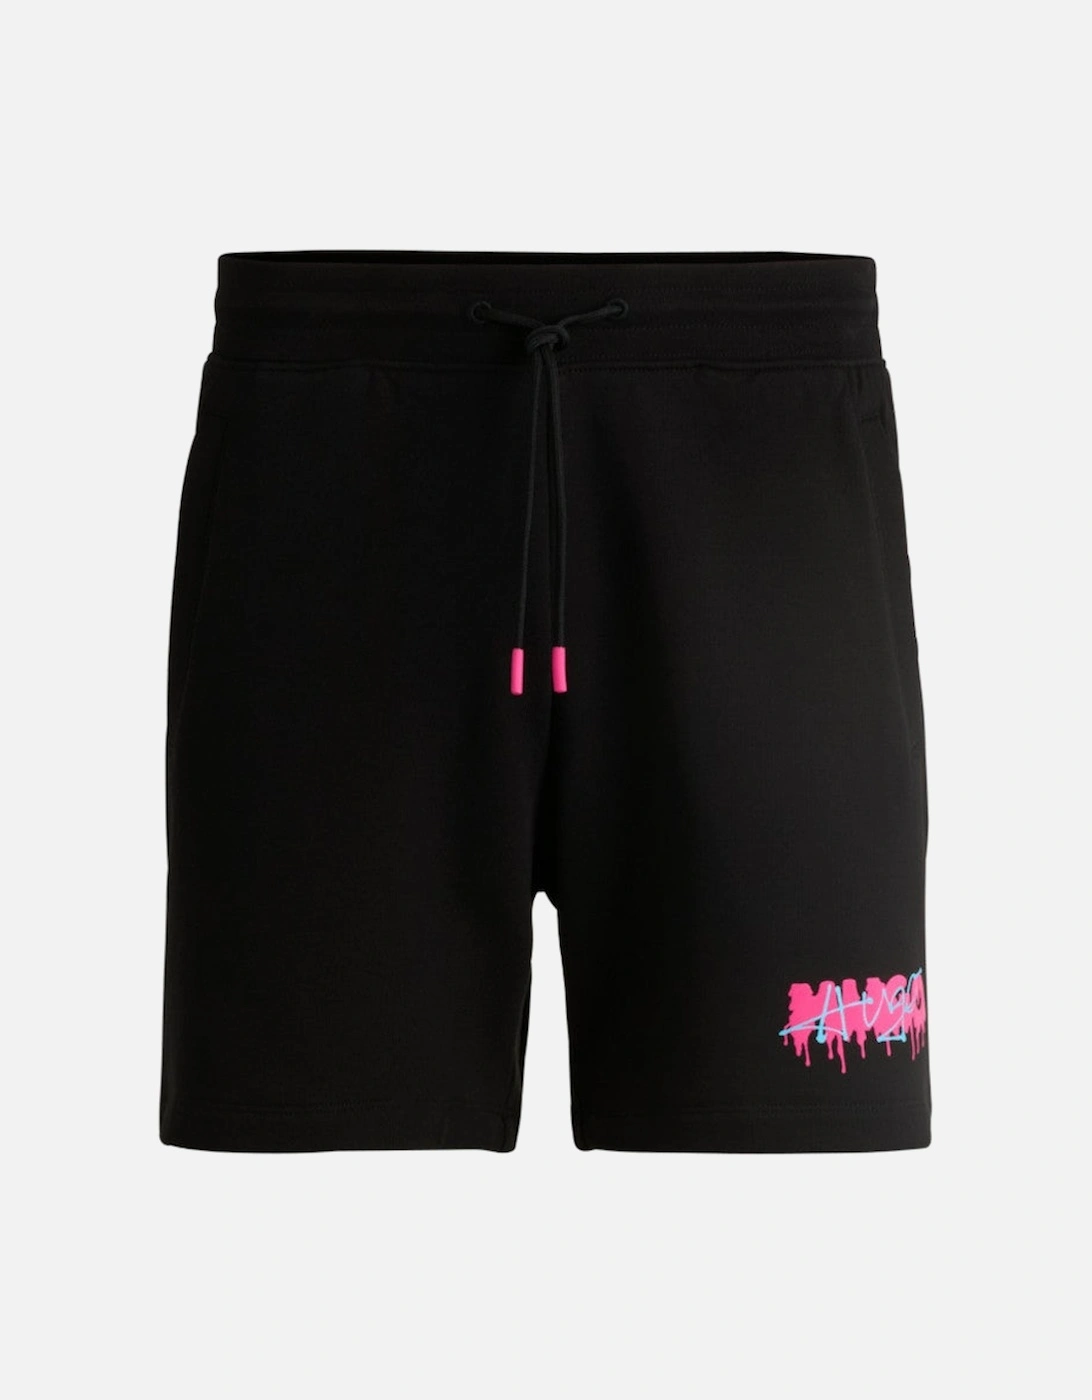 Dapalmi Shorts 001 Black, 5 of 4